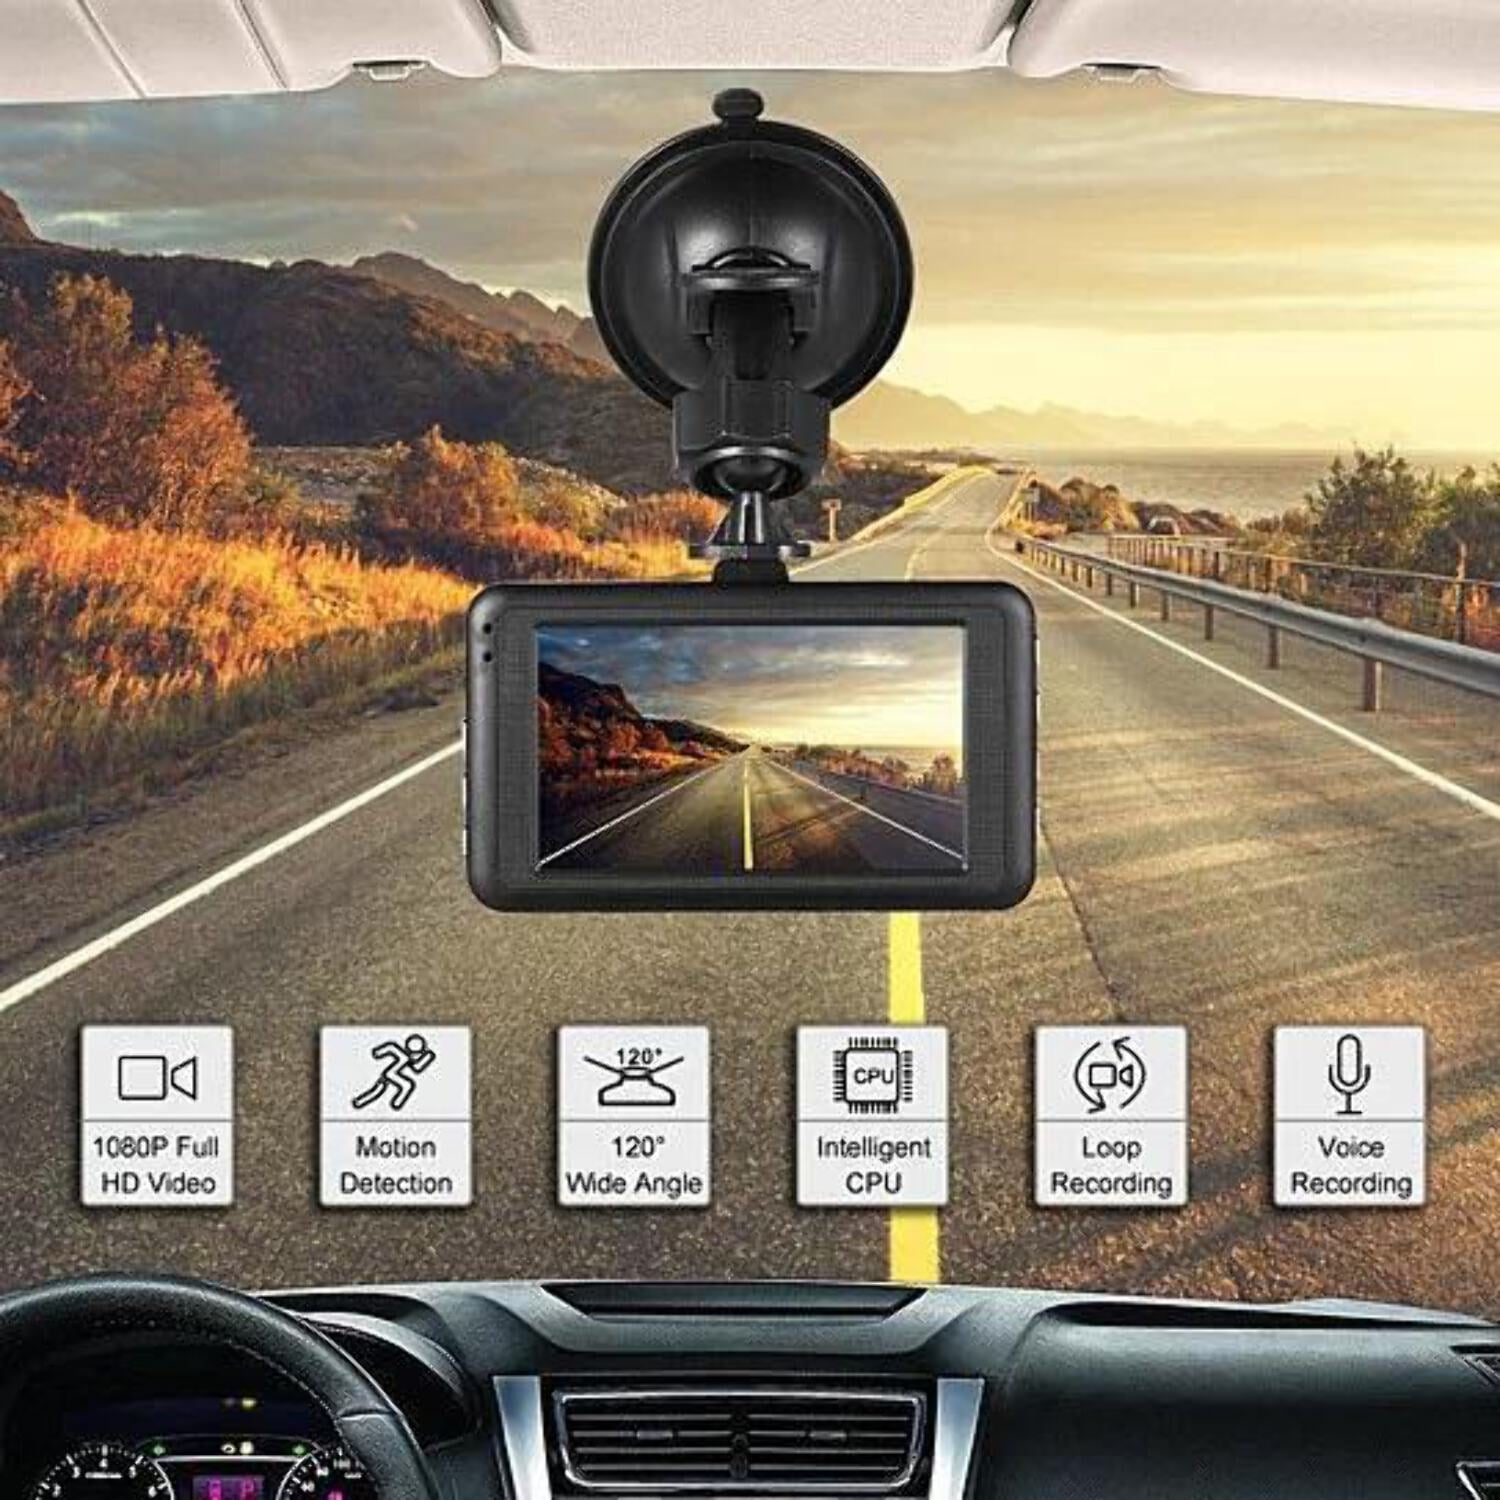 Garmin Dash Cam 57 HD dash cam with Bluetooth® and GPS at Crutchfield